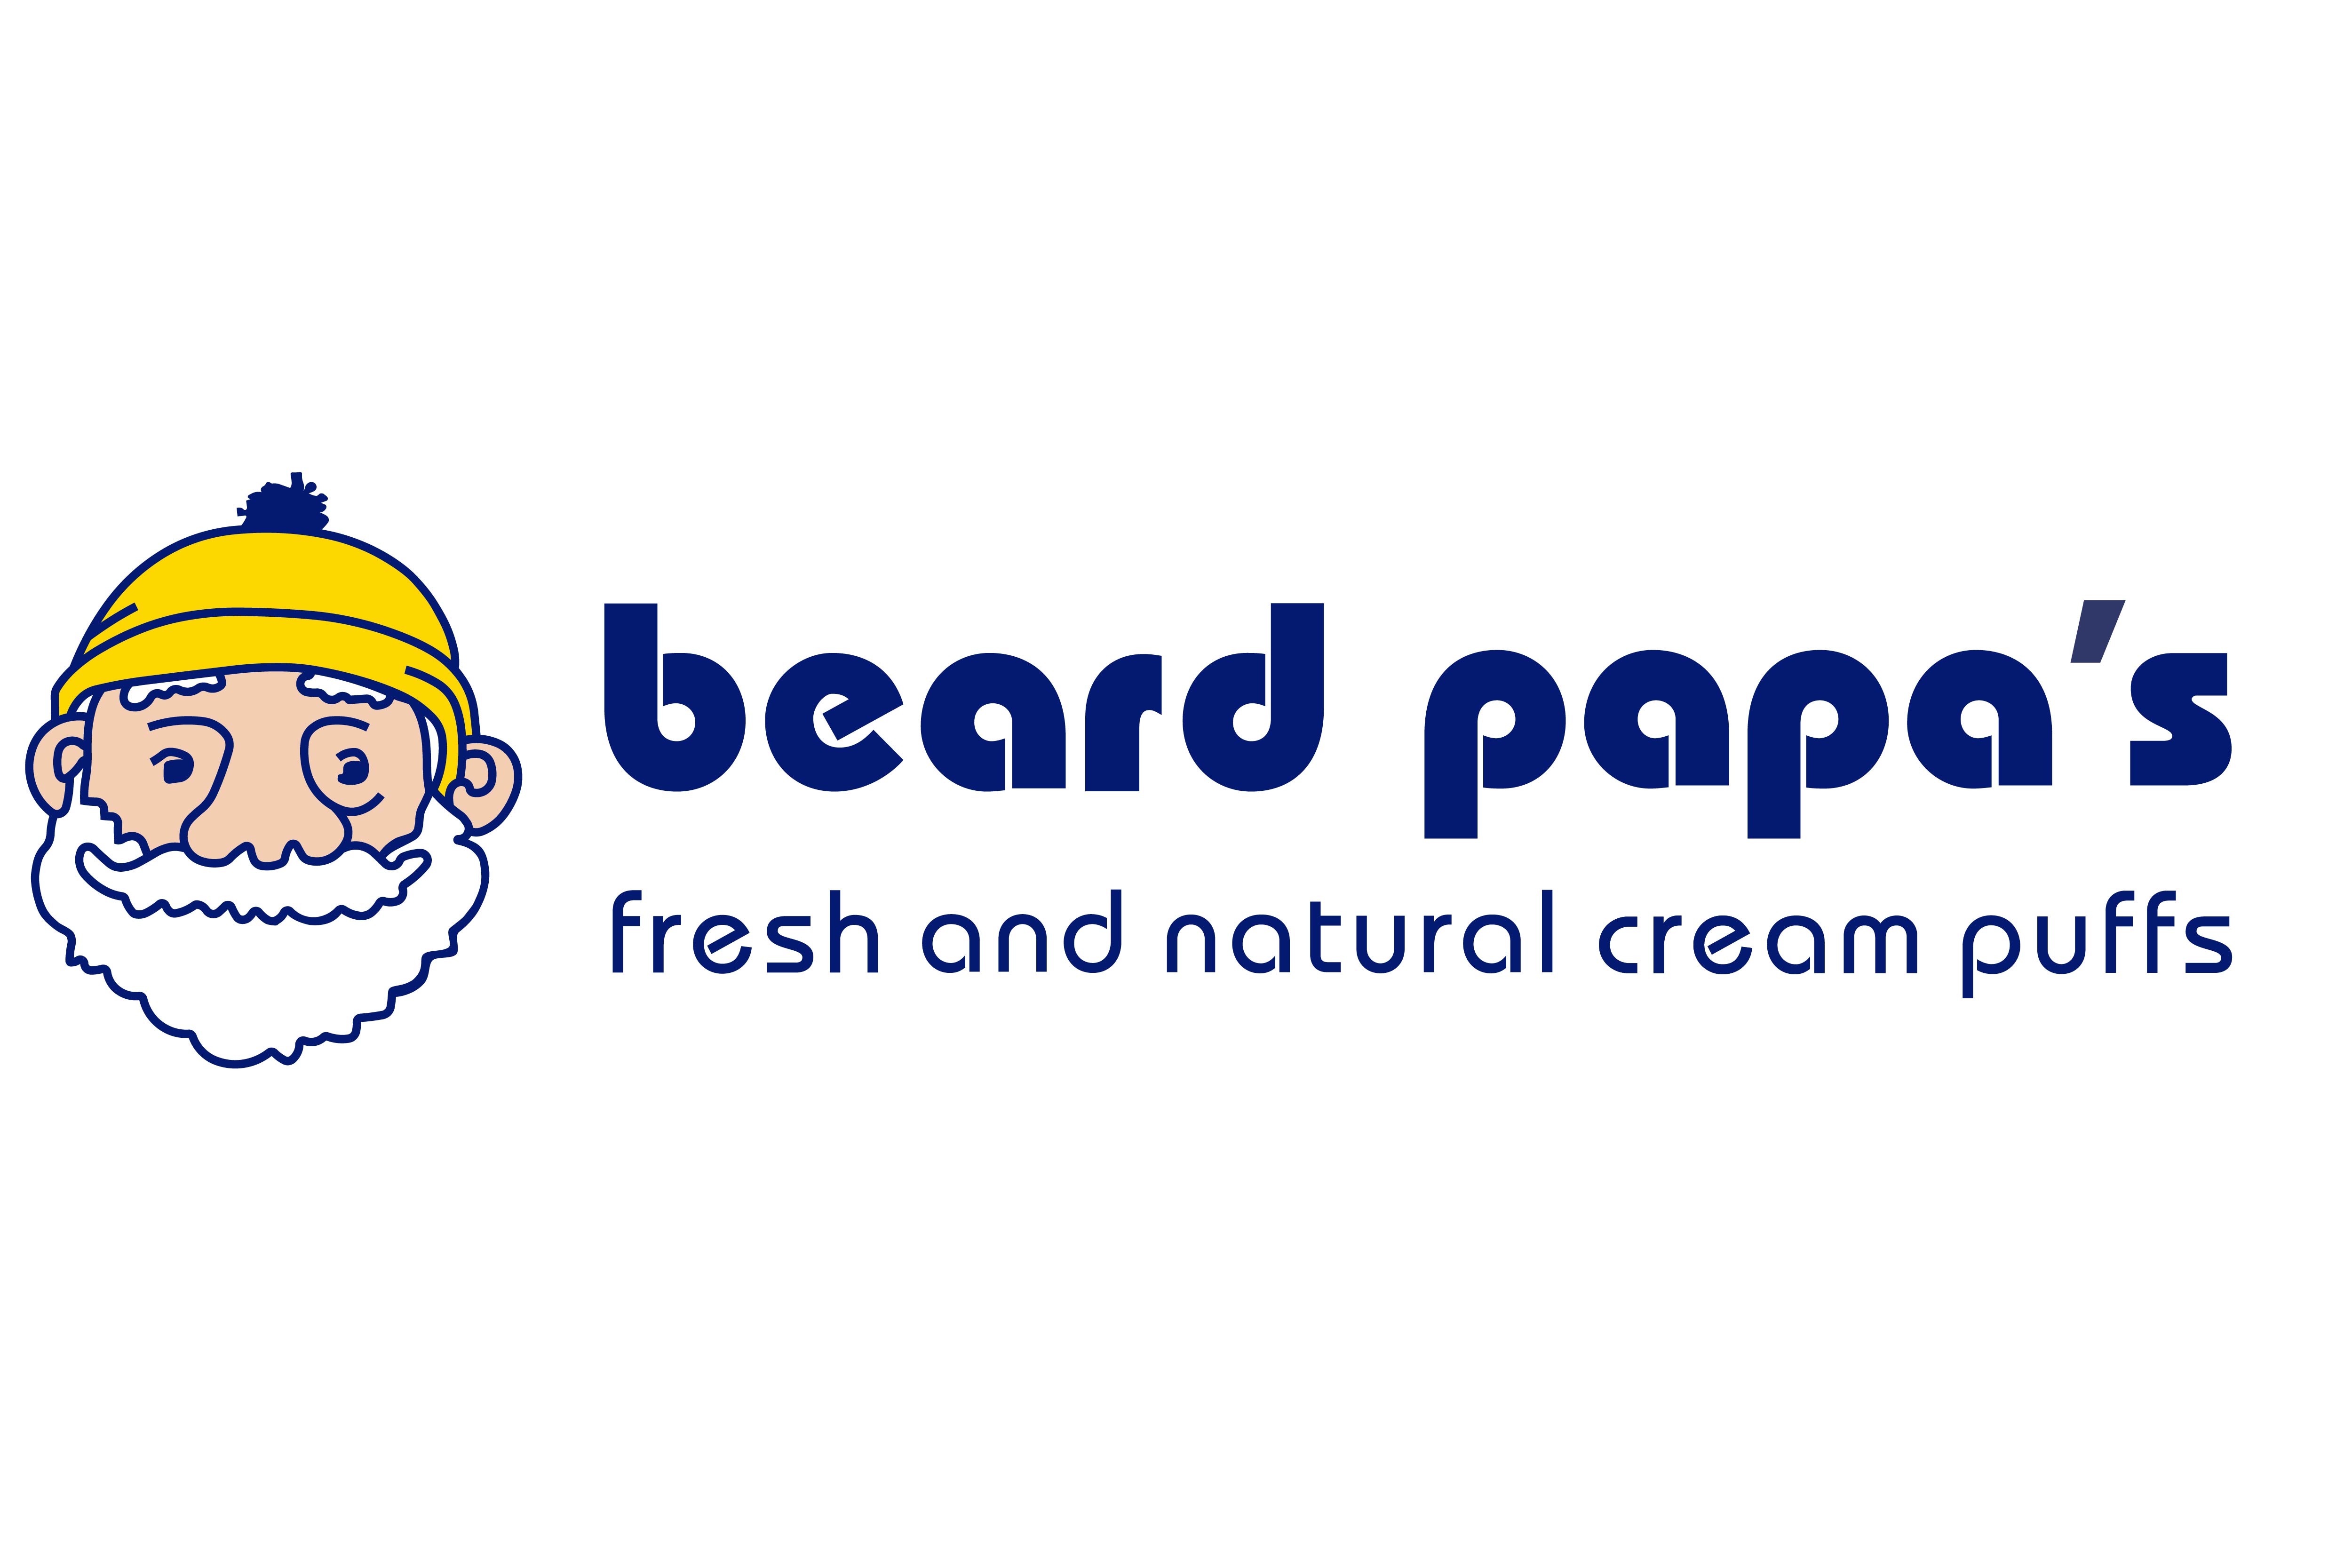 Beard papa’s｜五月美味